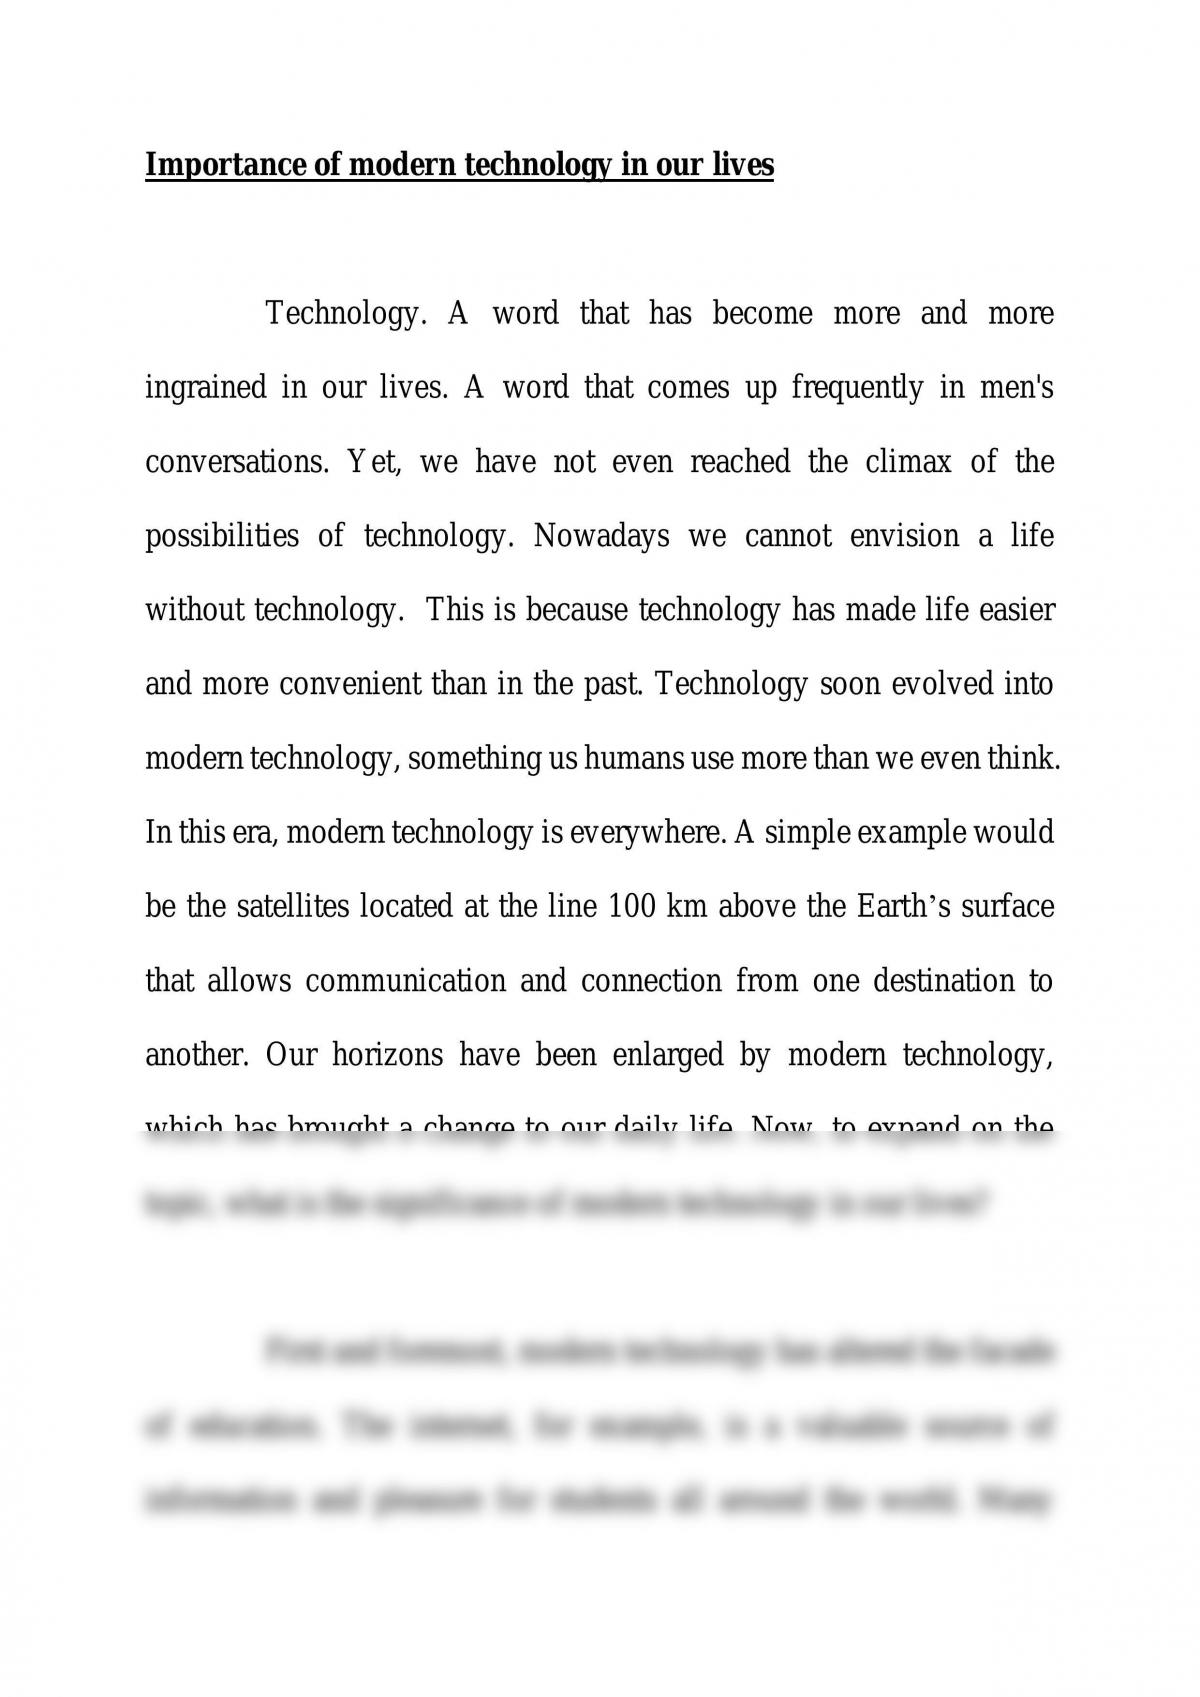 modern technology essay 250 words in english